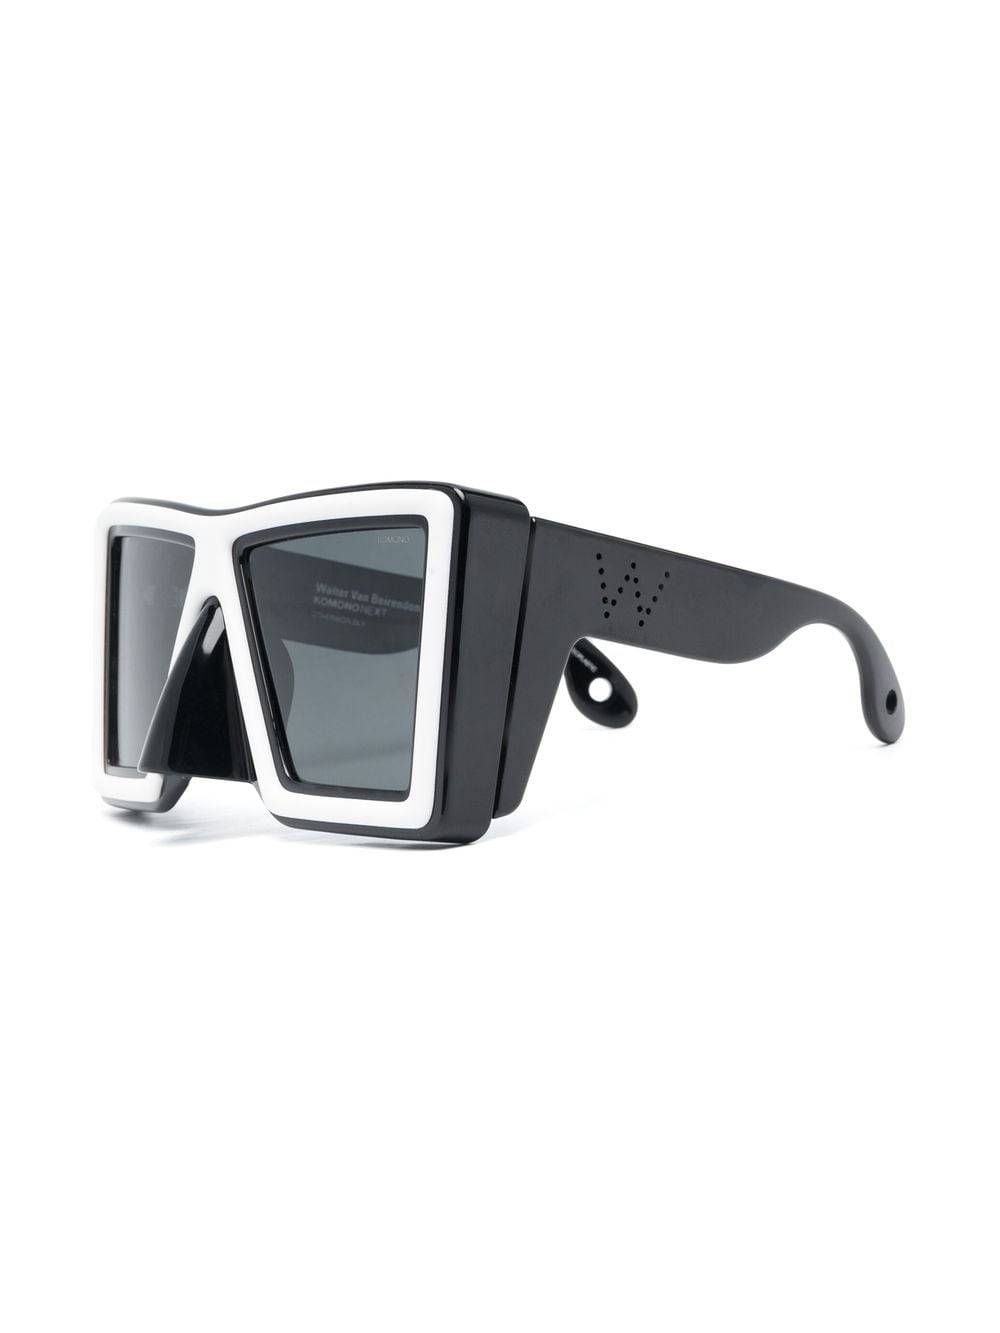 Walter Van Beirendonck Tinted square-frame Sunglasses - Farfetch